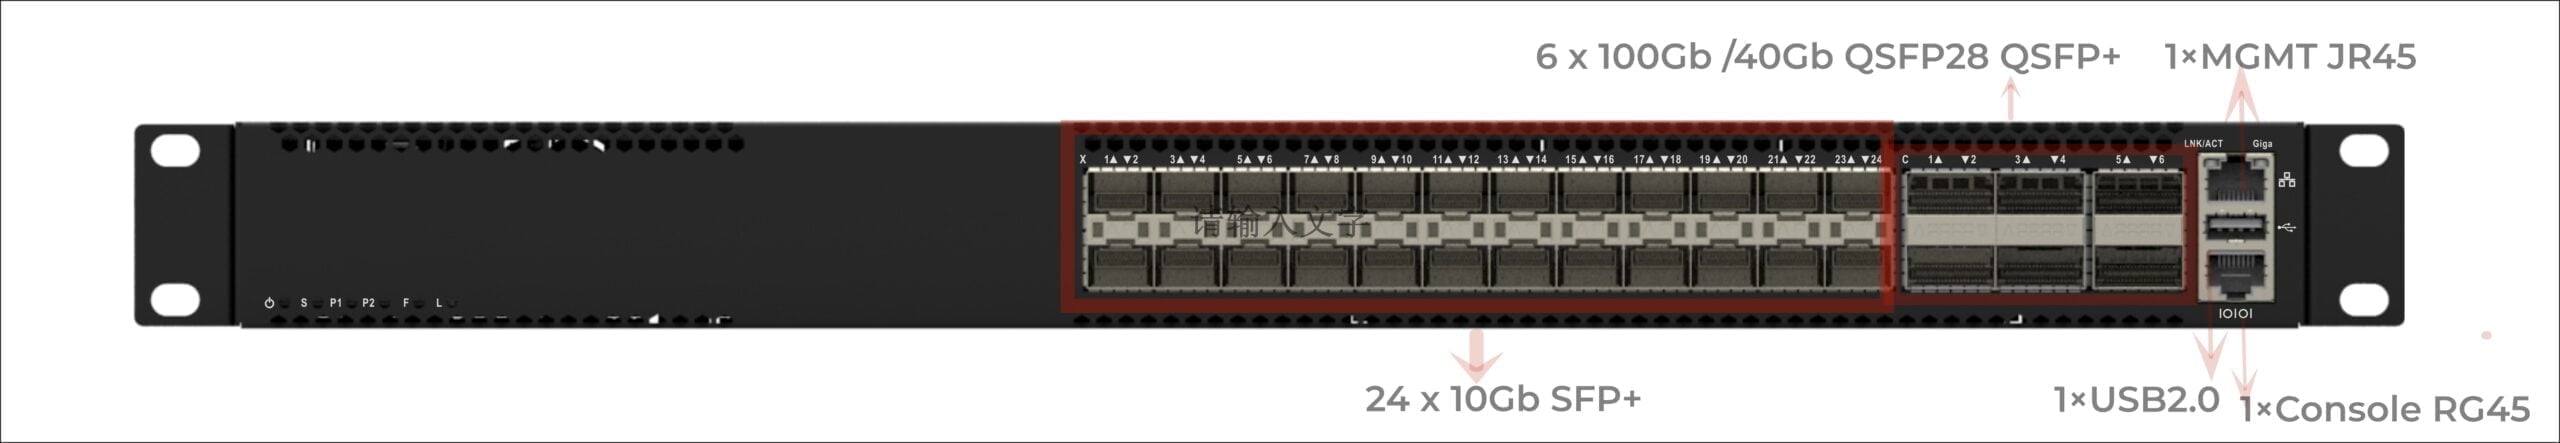 24x10Gb SFP+, 6x100Gb/40Gb QSFP28 QSFP+ L3 Leaf & Core Switch